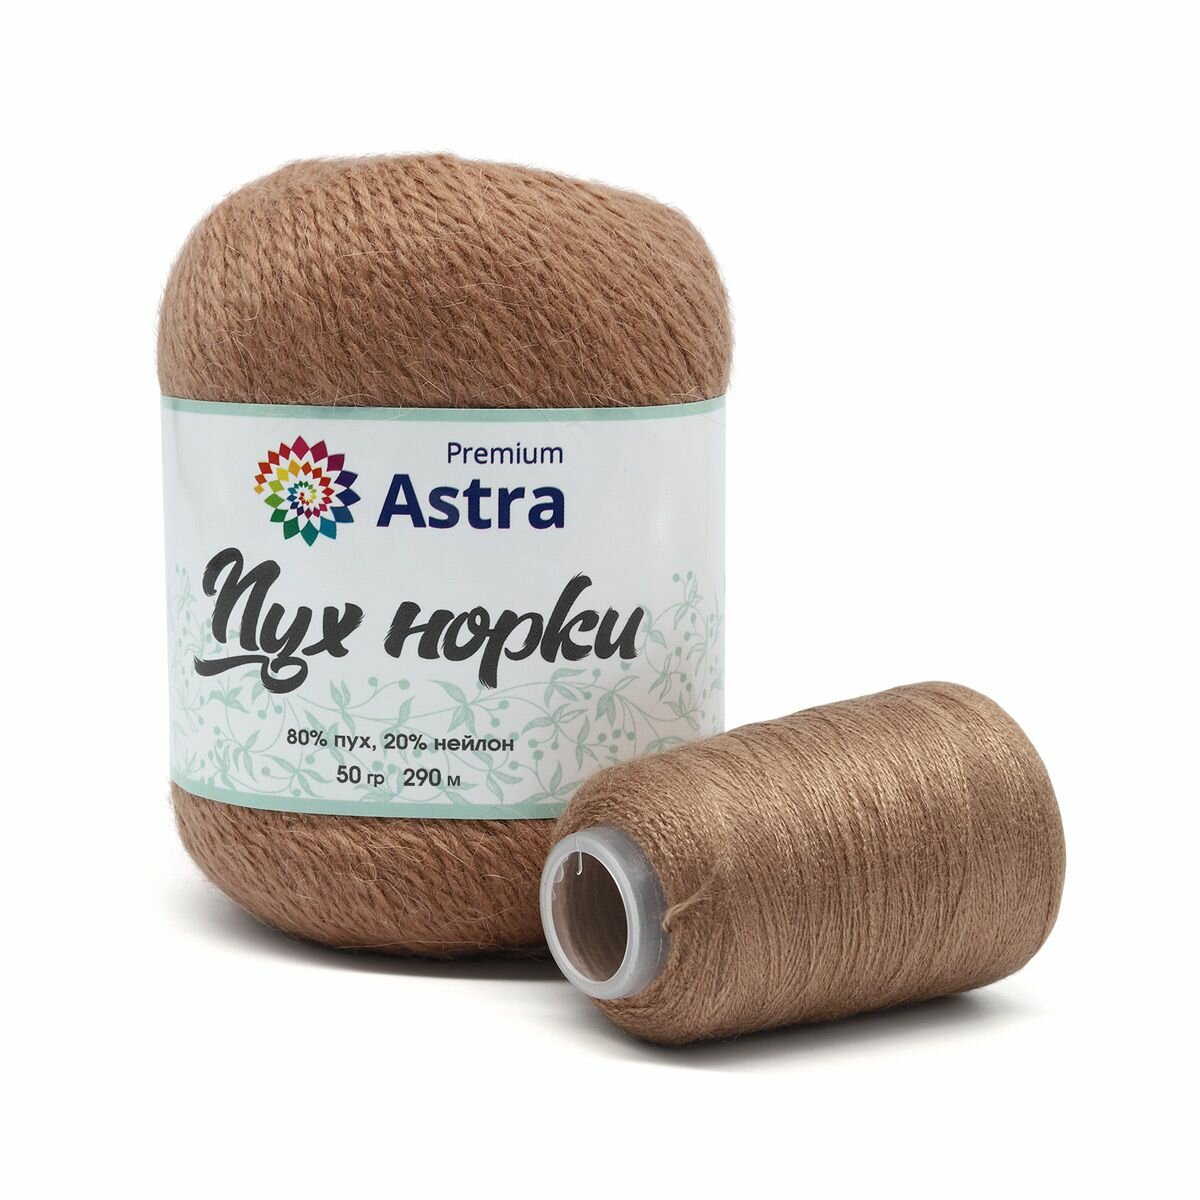 Пряжа для вязания Astra Premium 'Пух норки' (Mink yarn), 50г, 290м (+- 5%) (80% пух, 20% нейлон) (+ нить 20 г) (029 светлый каштан)